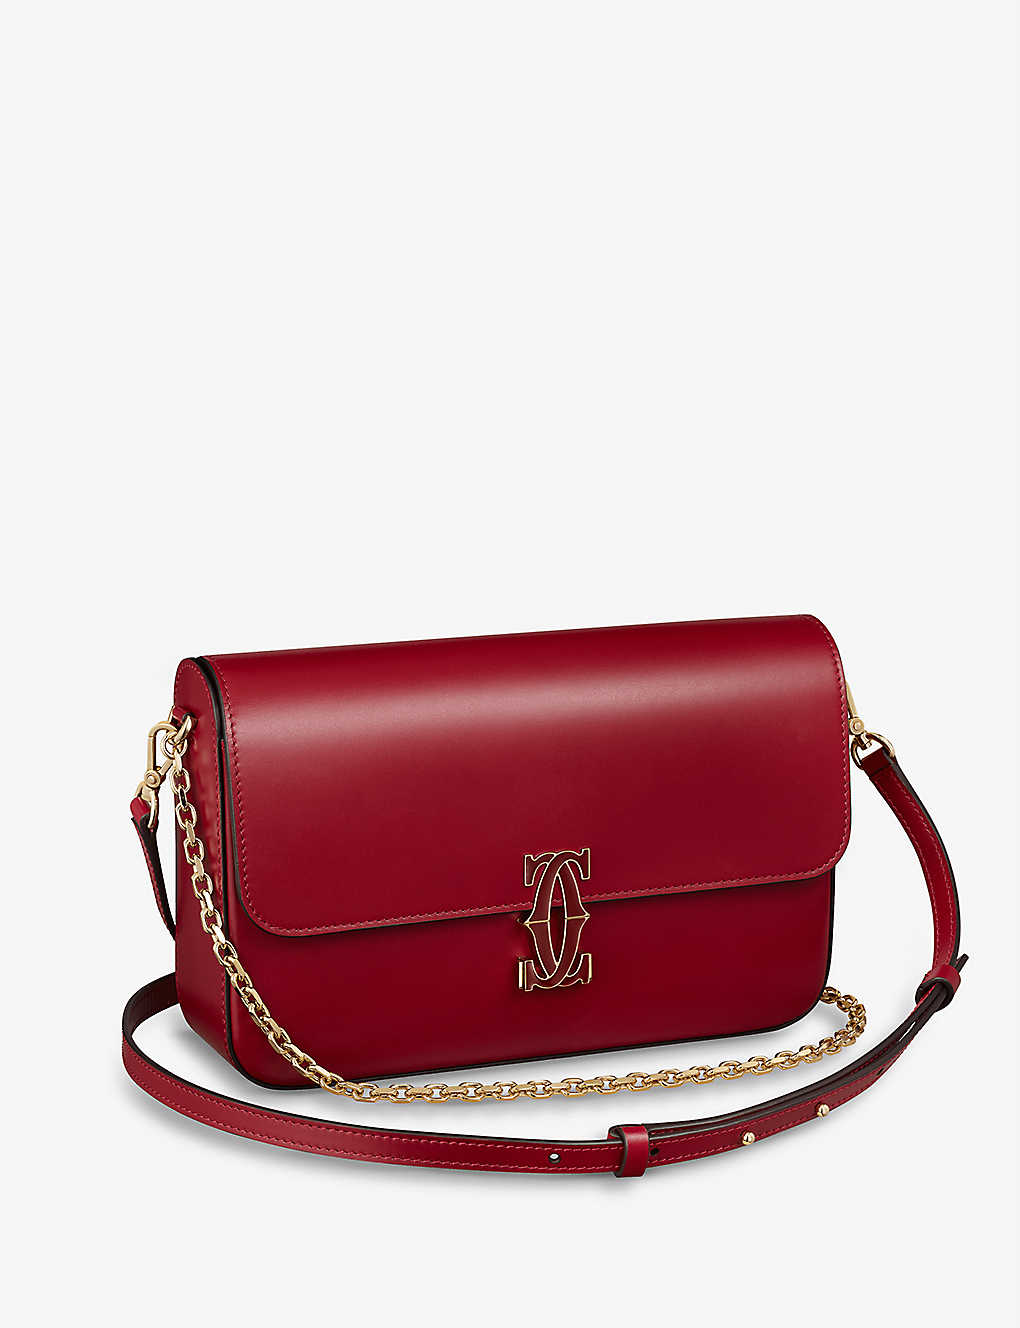 Cartier Womens Cherry Red Double C De Small Leather Shoulder Bag